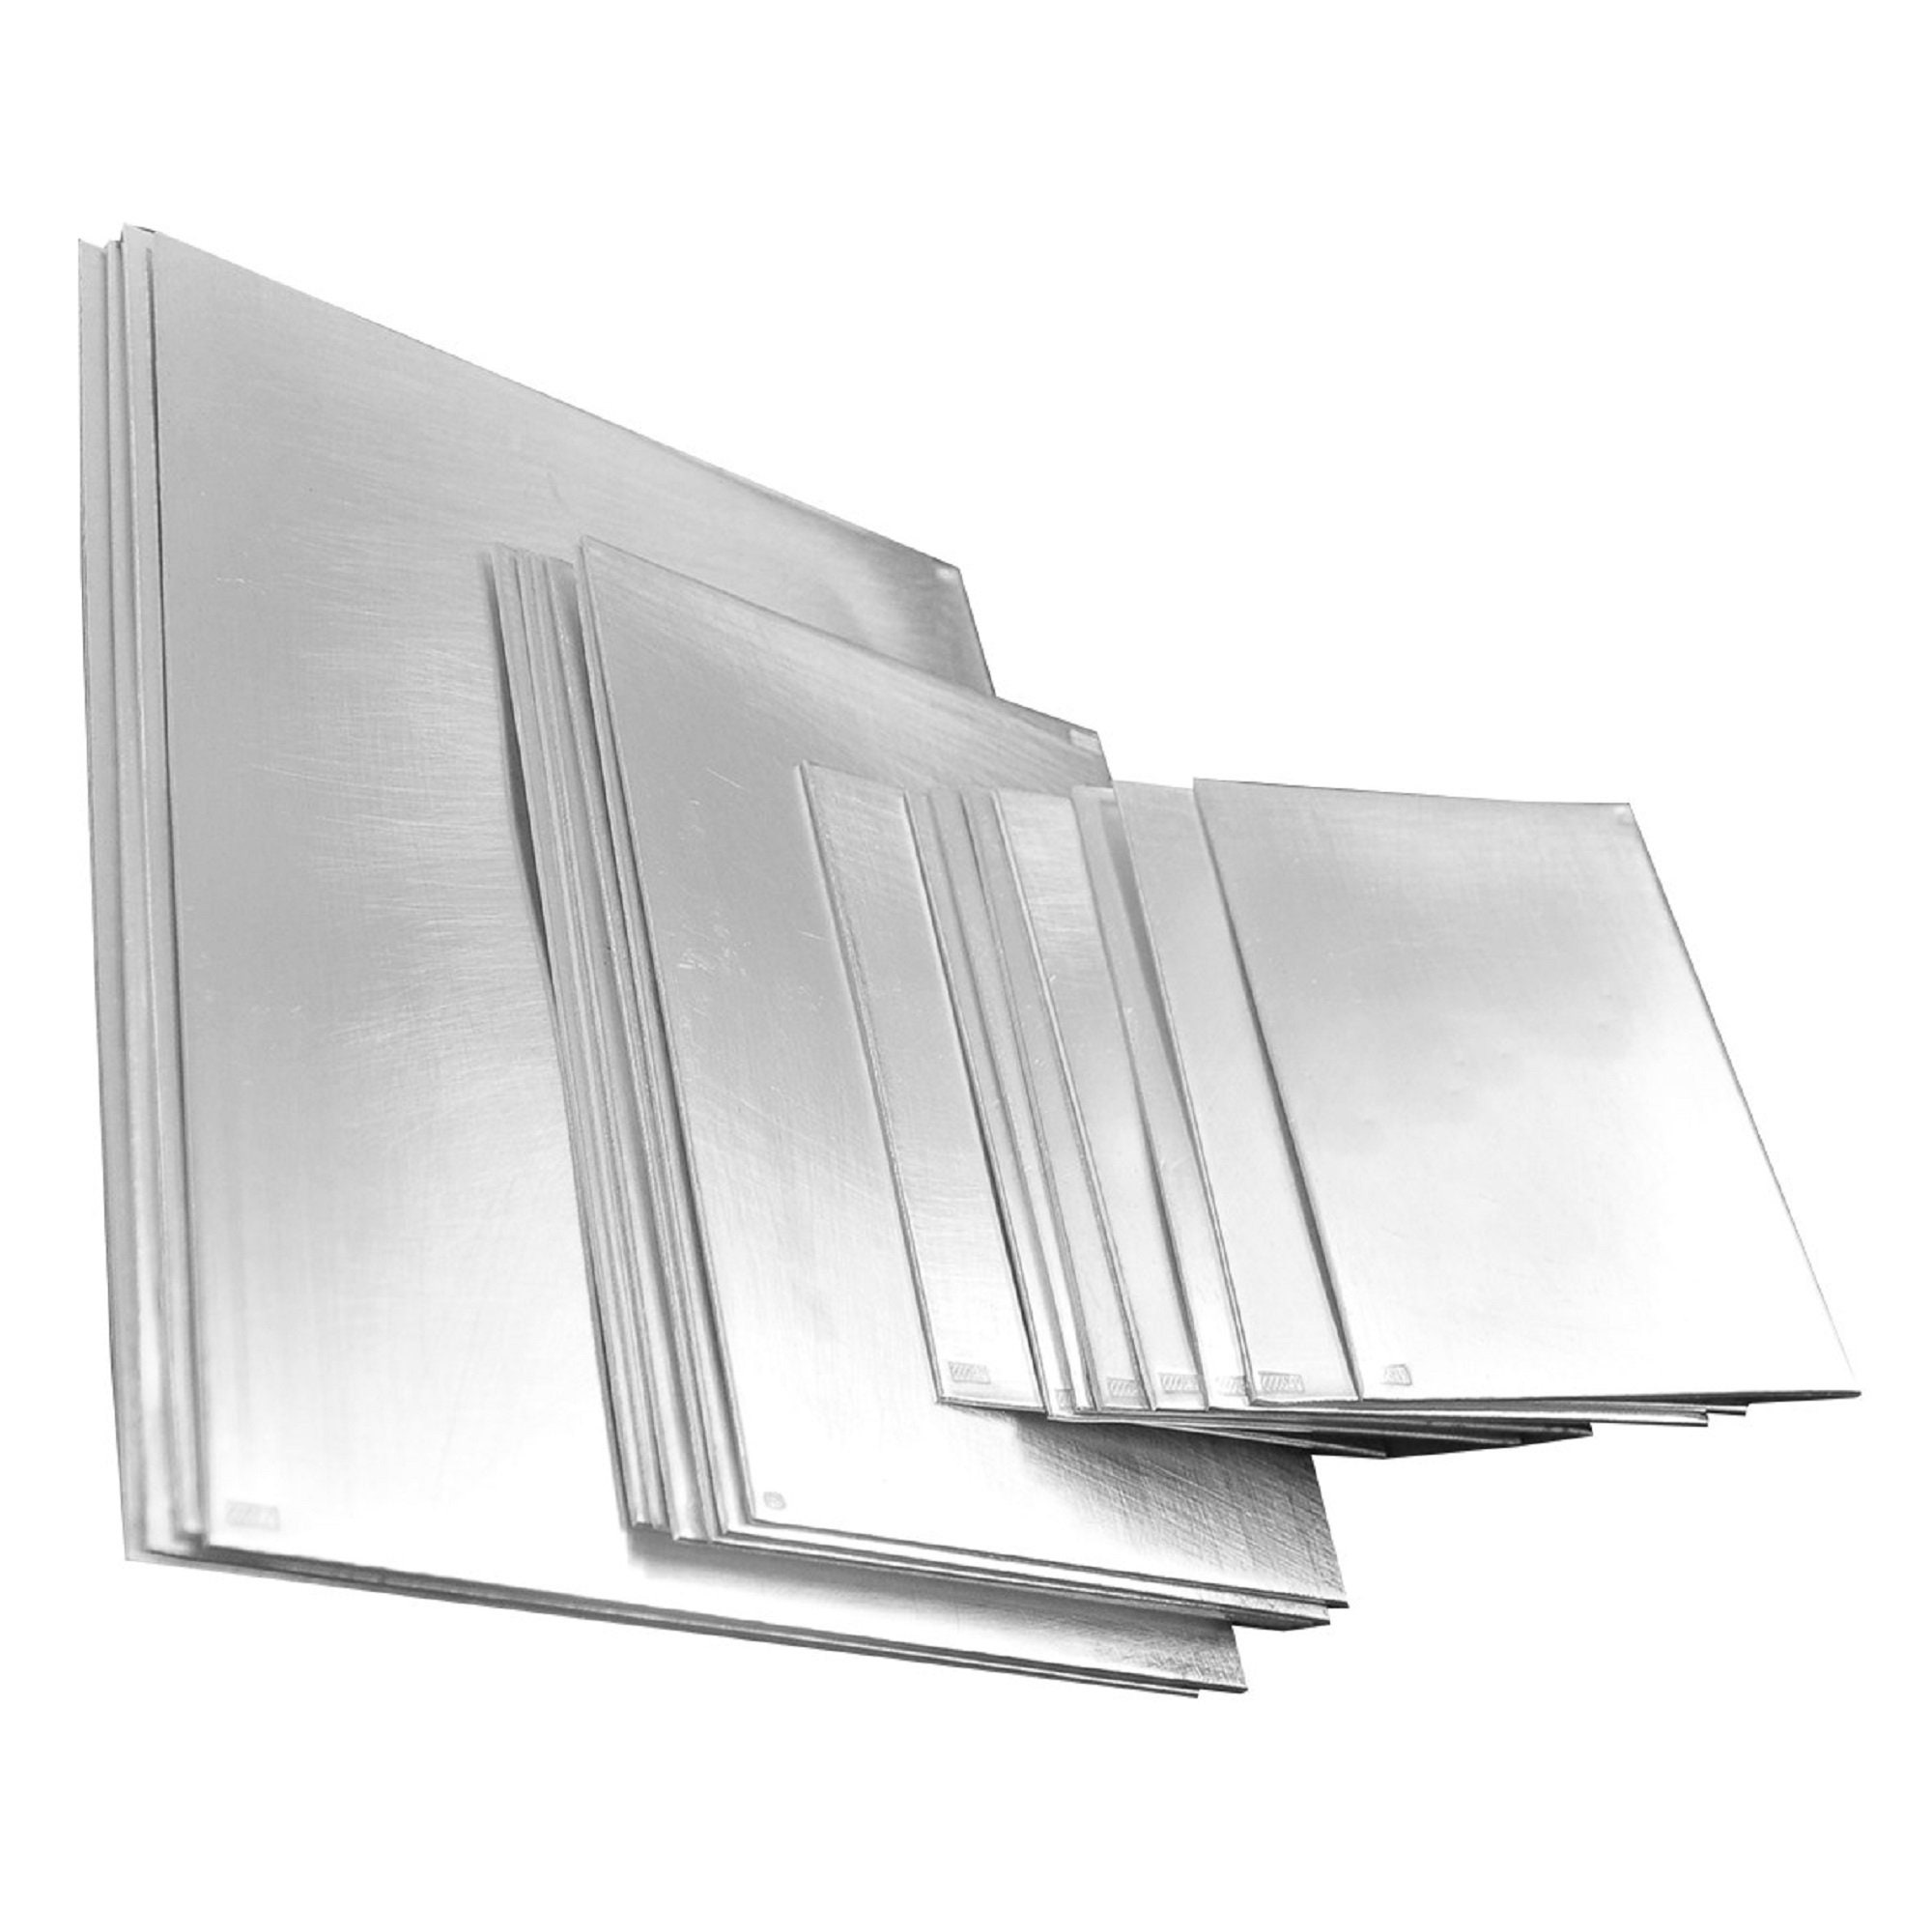 4x 6 Sterling Silver Sheets - 18, 20, 22, 24 Gauge